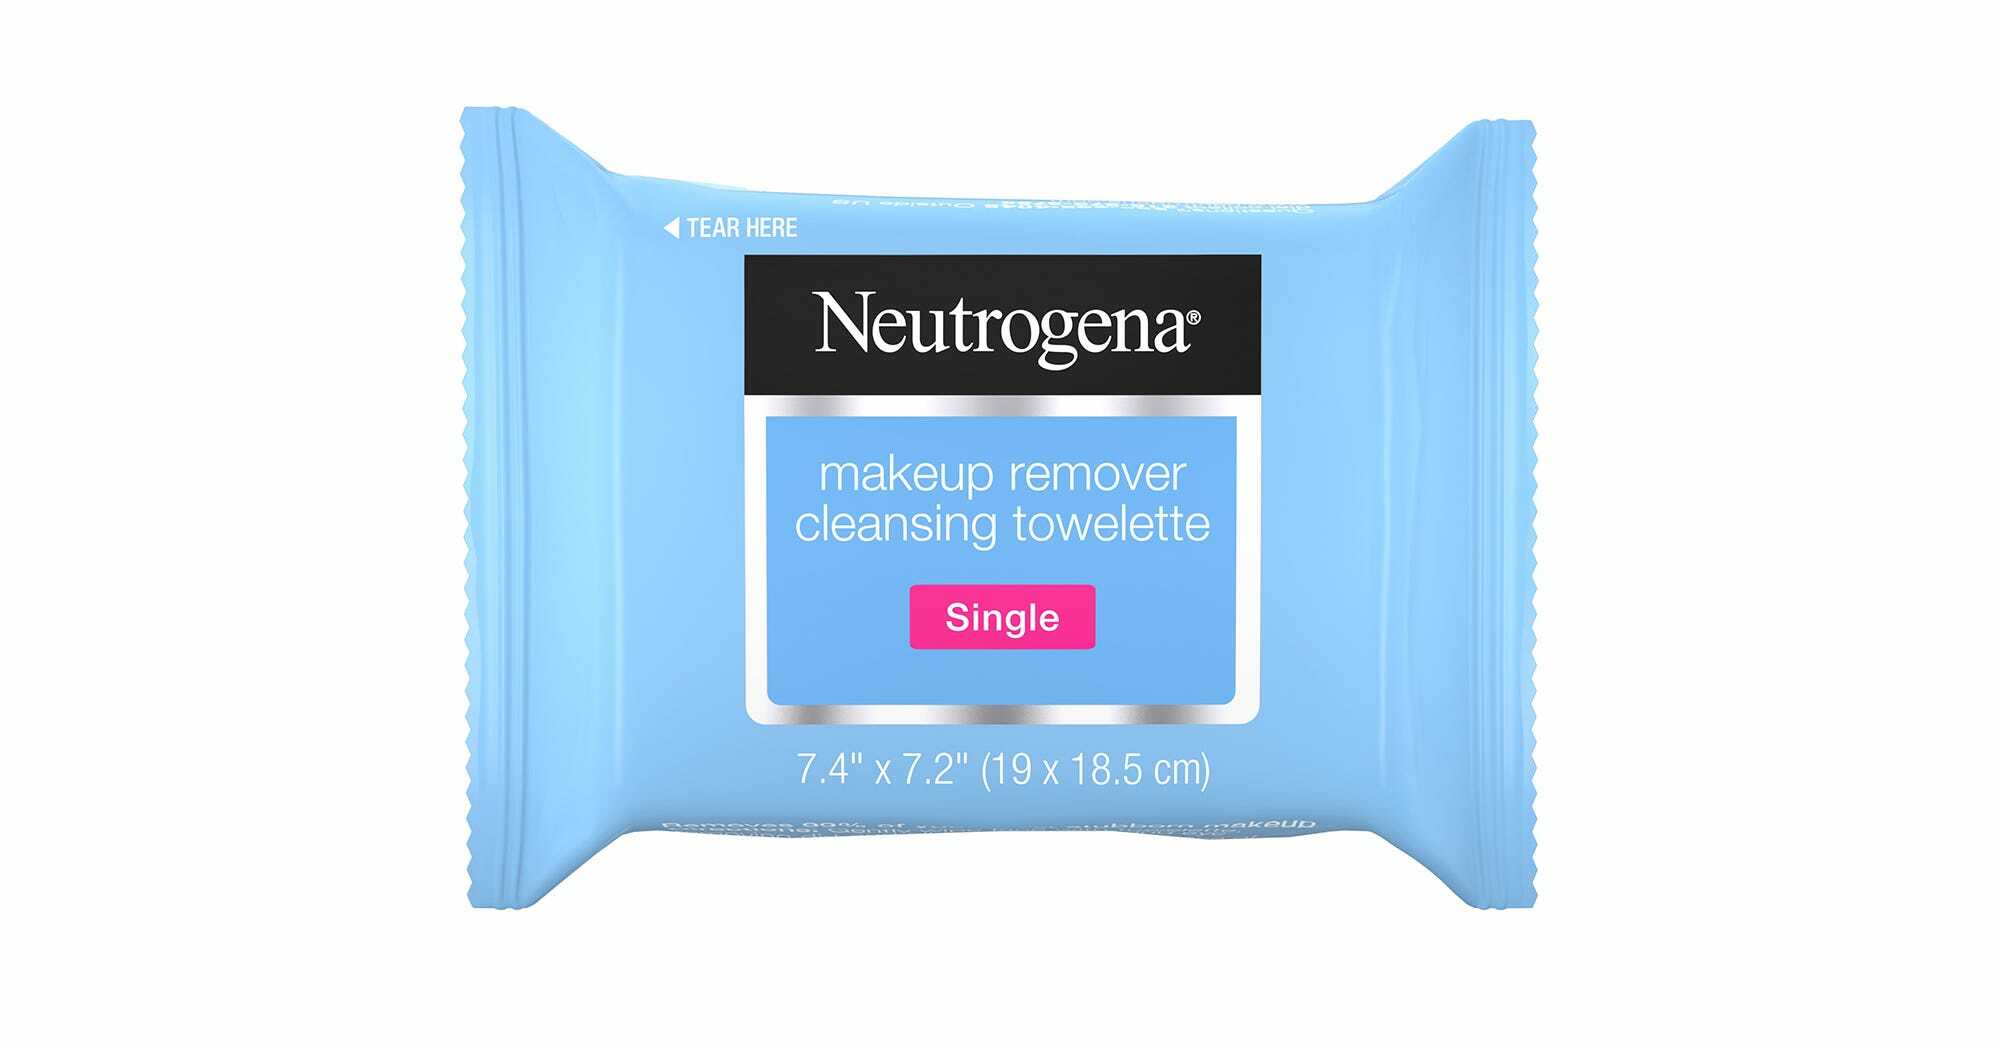 Neutrogena Makeup Remover Towelette Single - ilulily designs